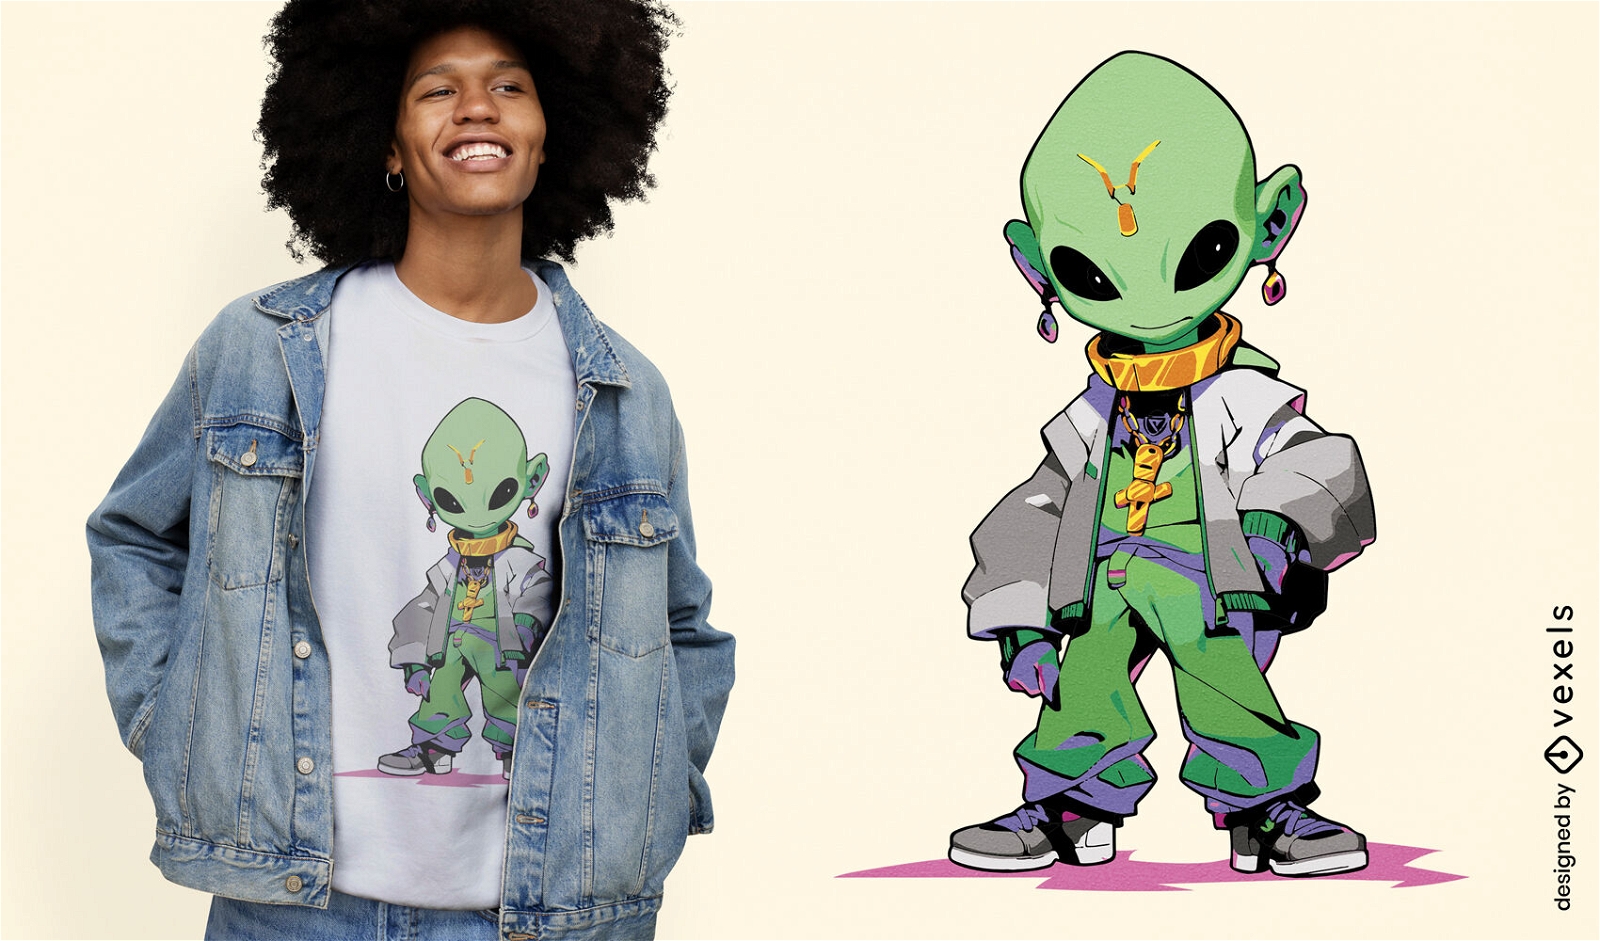 Dise?o de camiseta de rapero alien?gena.